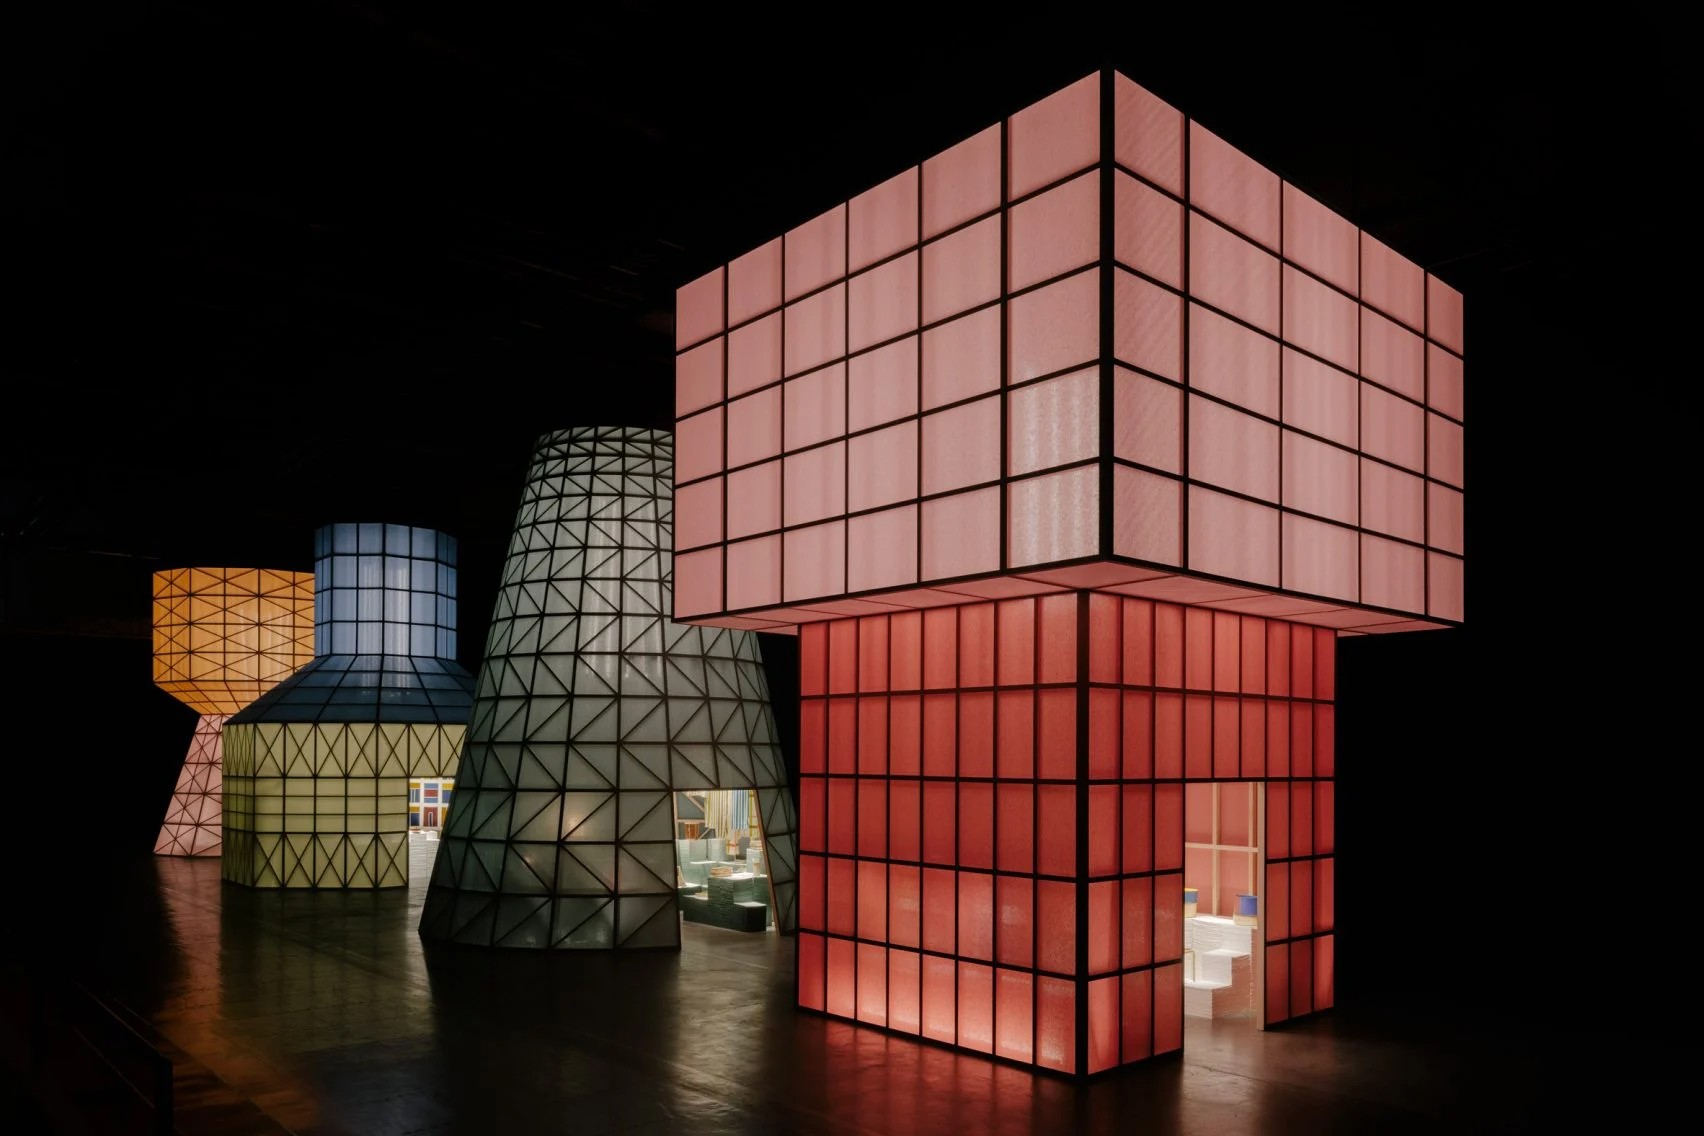 Hermès creates "monumental" water tower structures that shine like lanterns